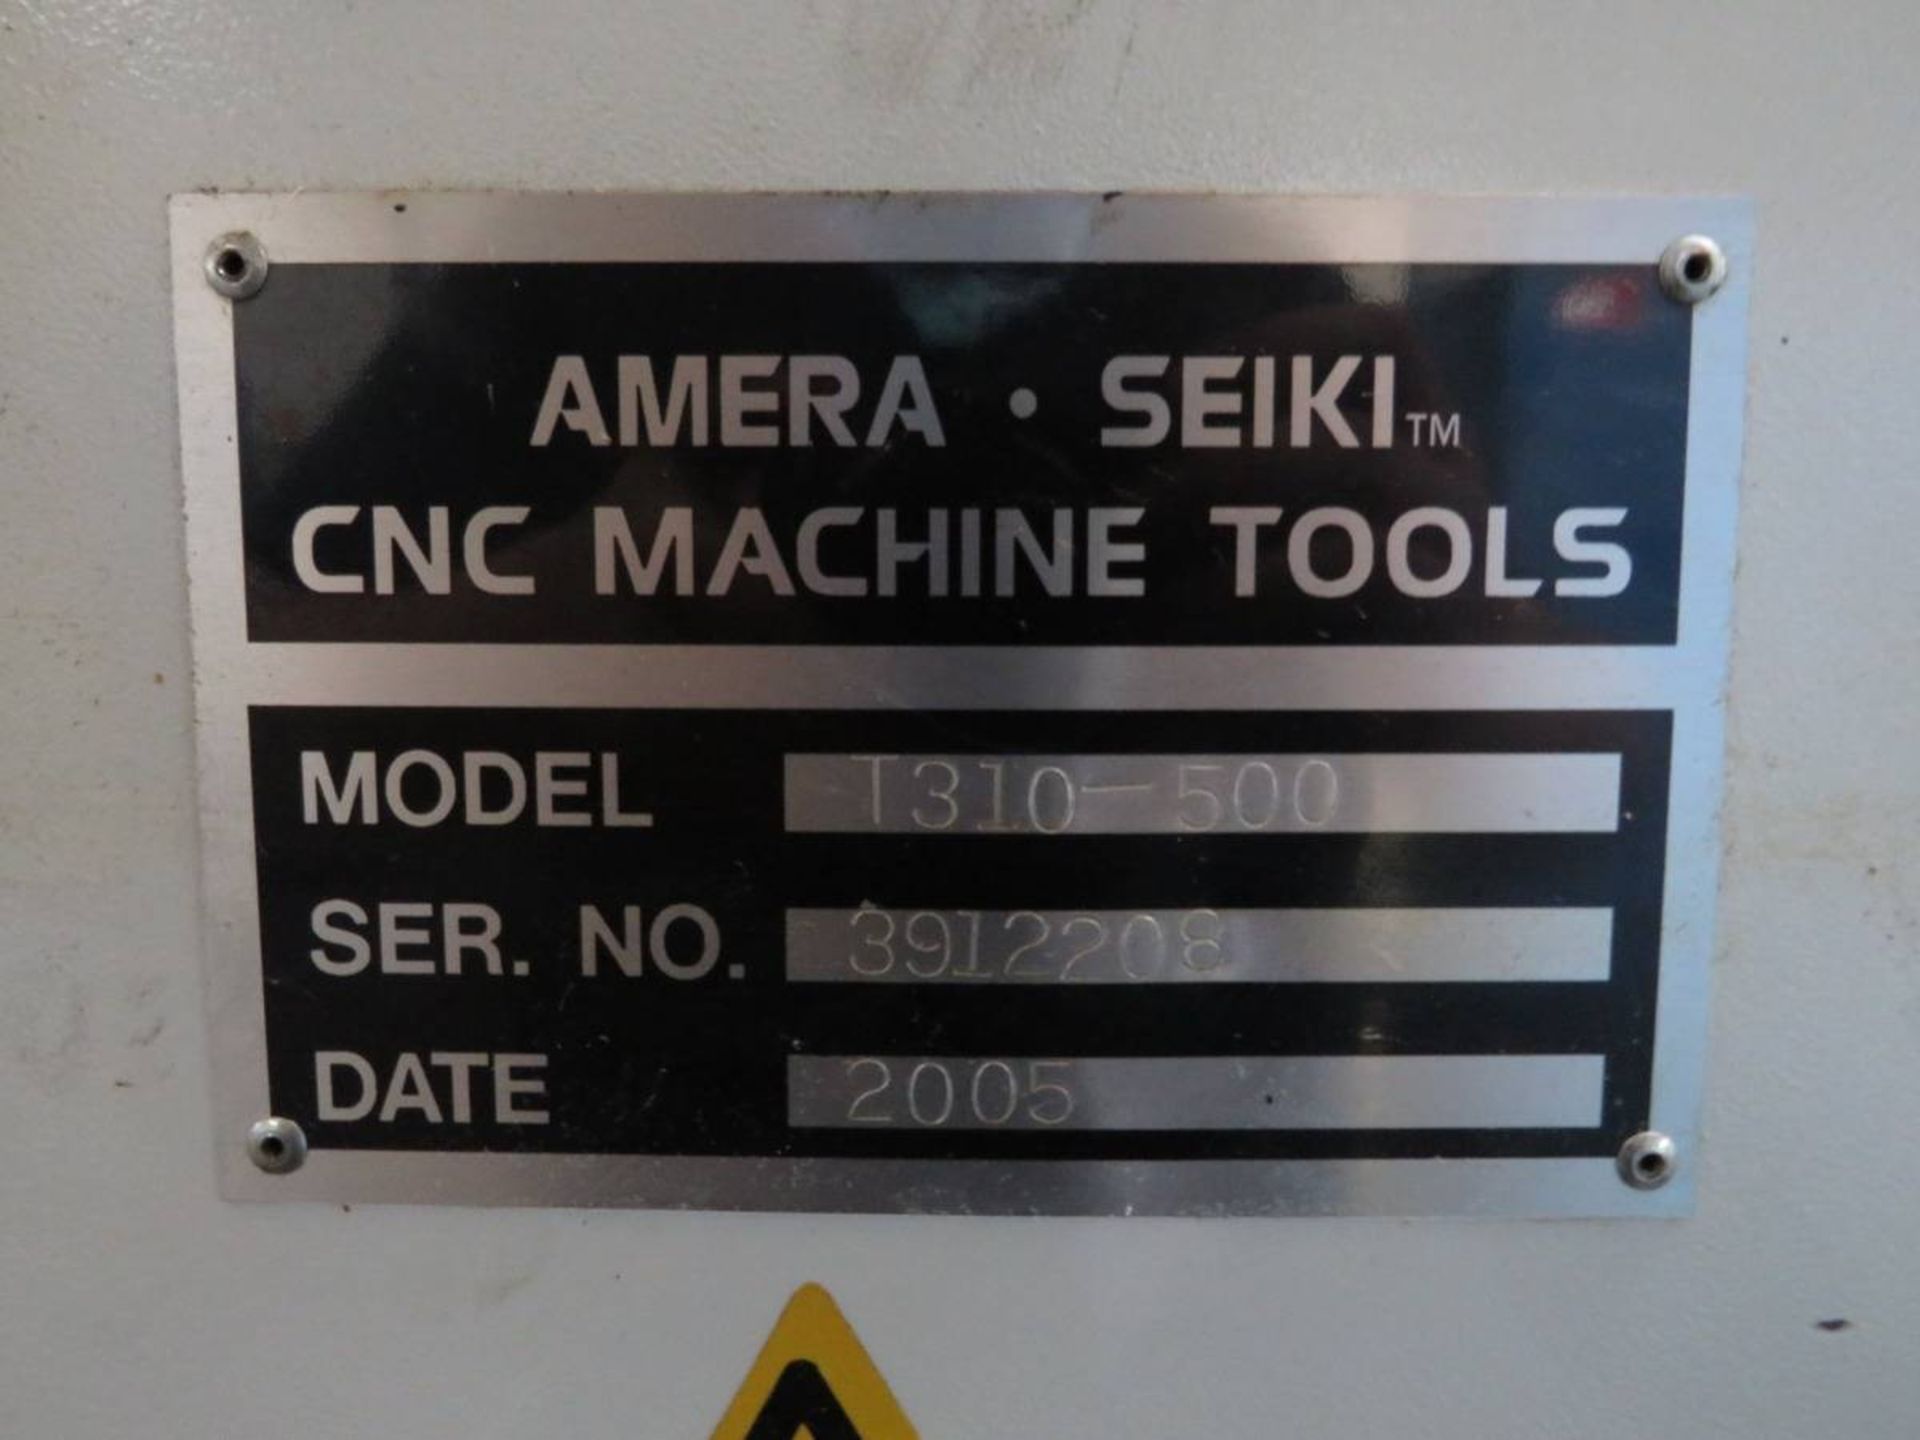 2003 Amera Seiki T310-500 2 Axis CNC Turning Center - Image 12 of 12